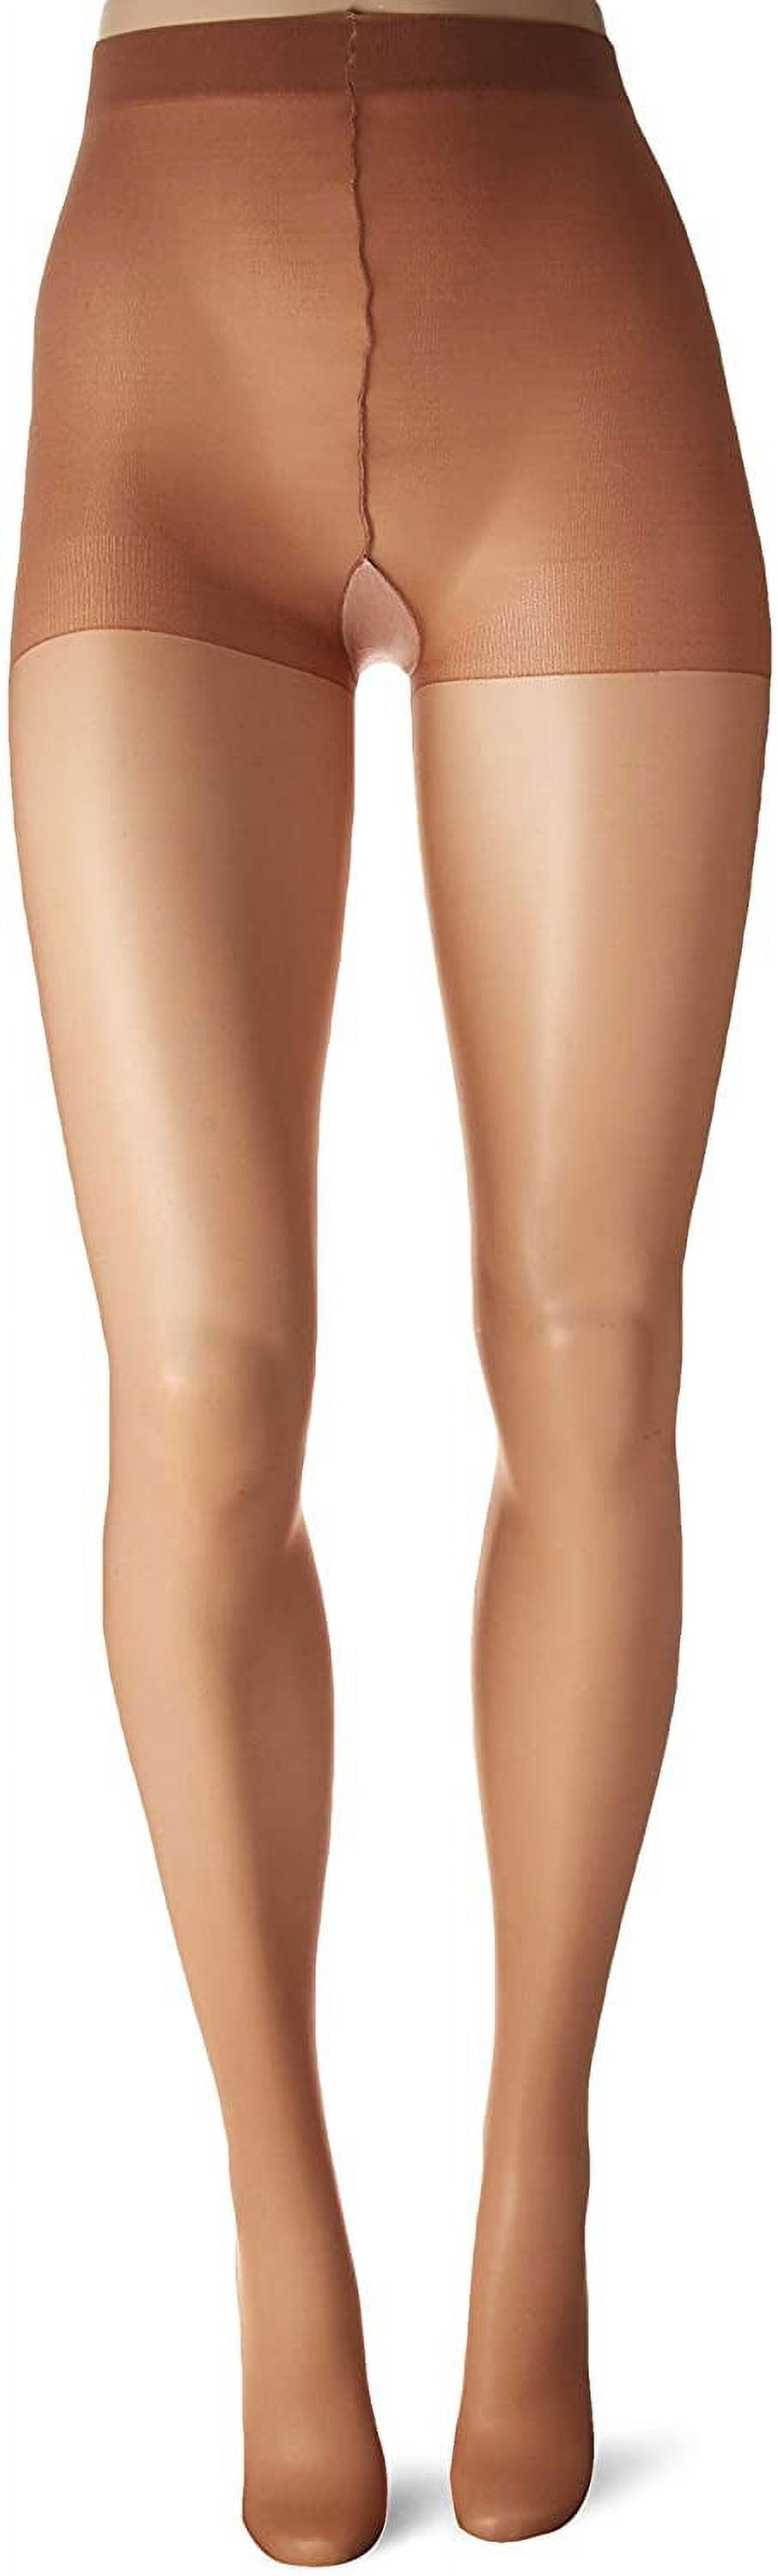 Hanes Women's Silk Reflections Silky Non-Control Top Pantyhose, 6 pairs 